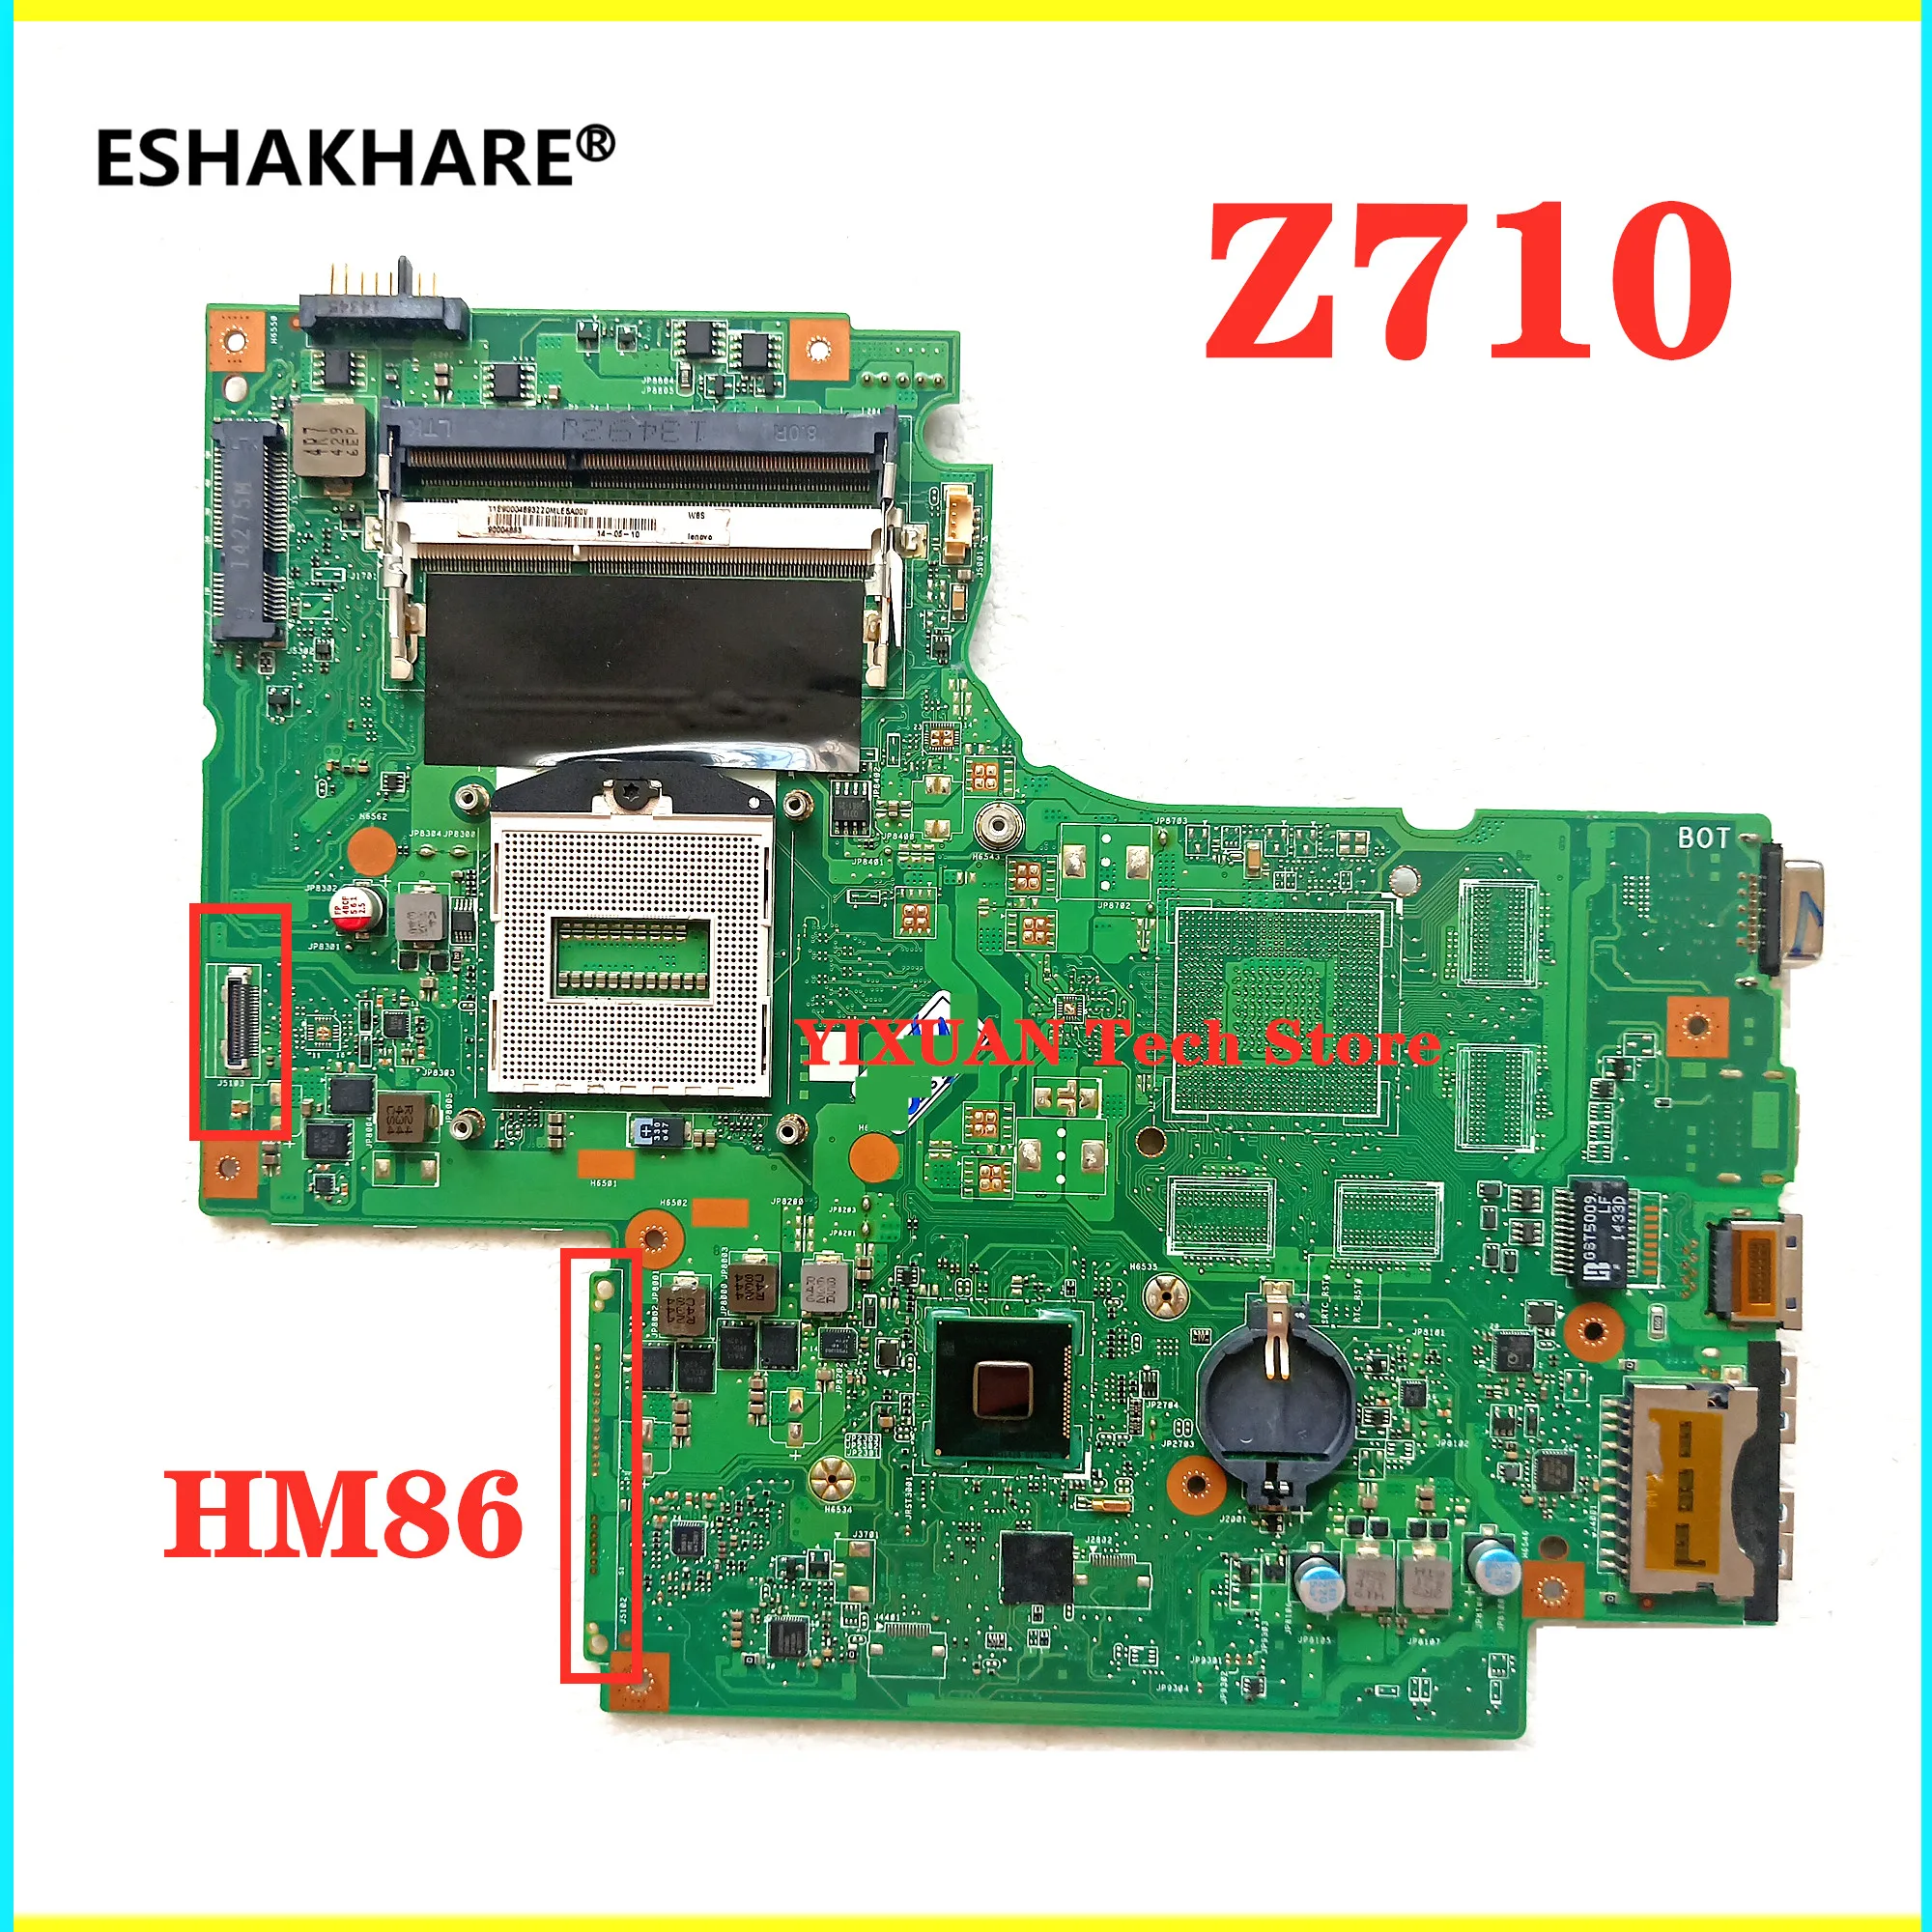 ESHAKHARE DUMB02 Motherboard for Lenovo Z710 Laptop    Motherboard HM86 100% tested work